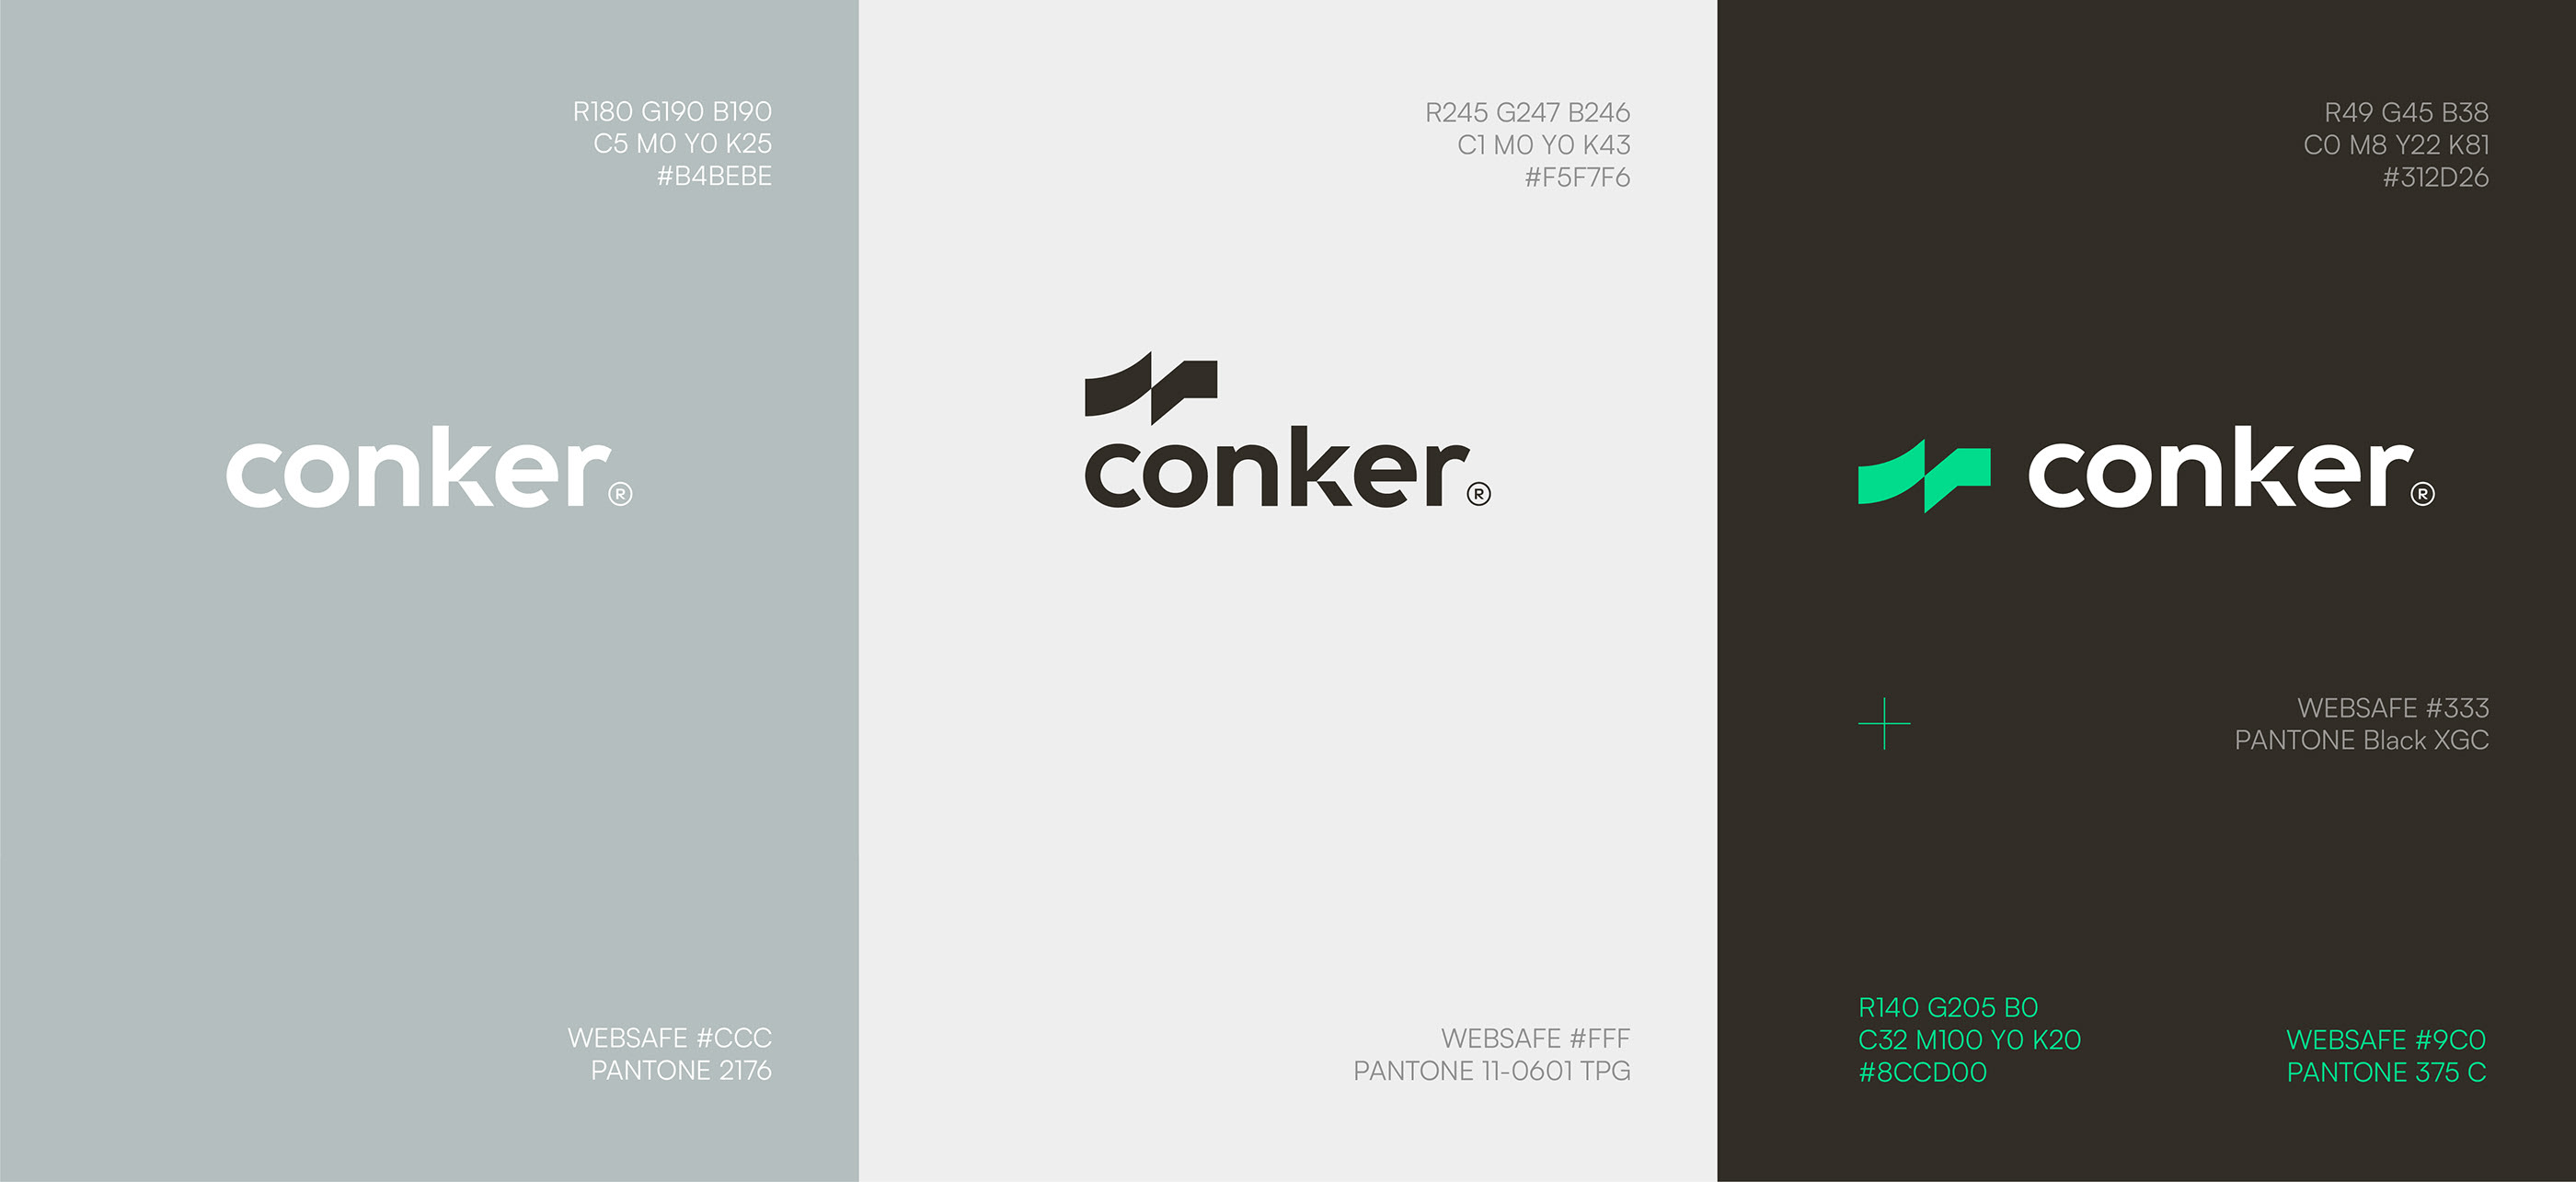 Conker Concreting — Изображение №3 — Брендинг, 3D на Dprofile